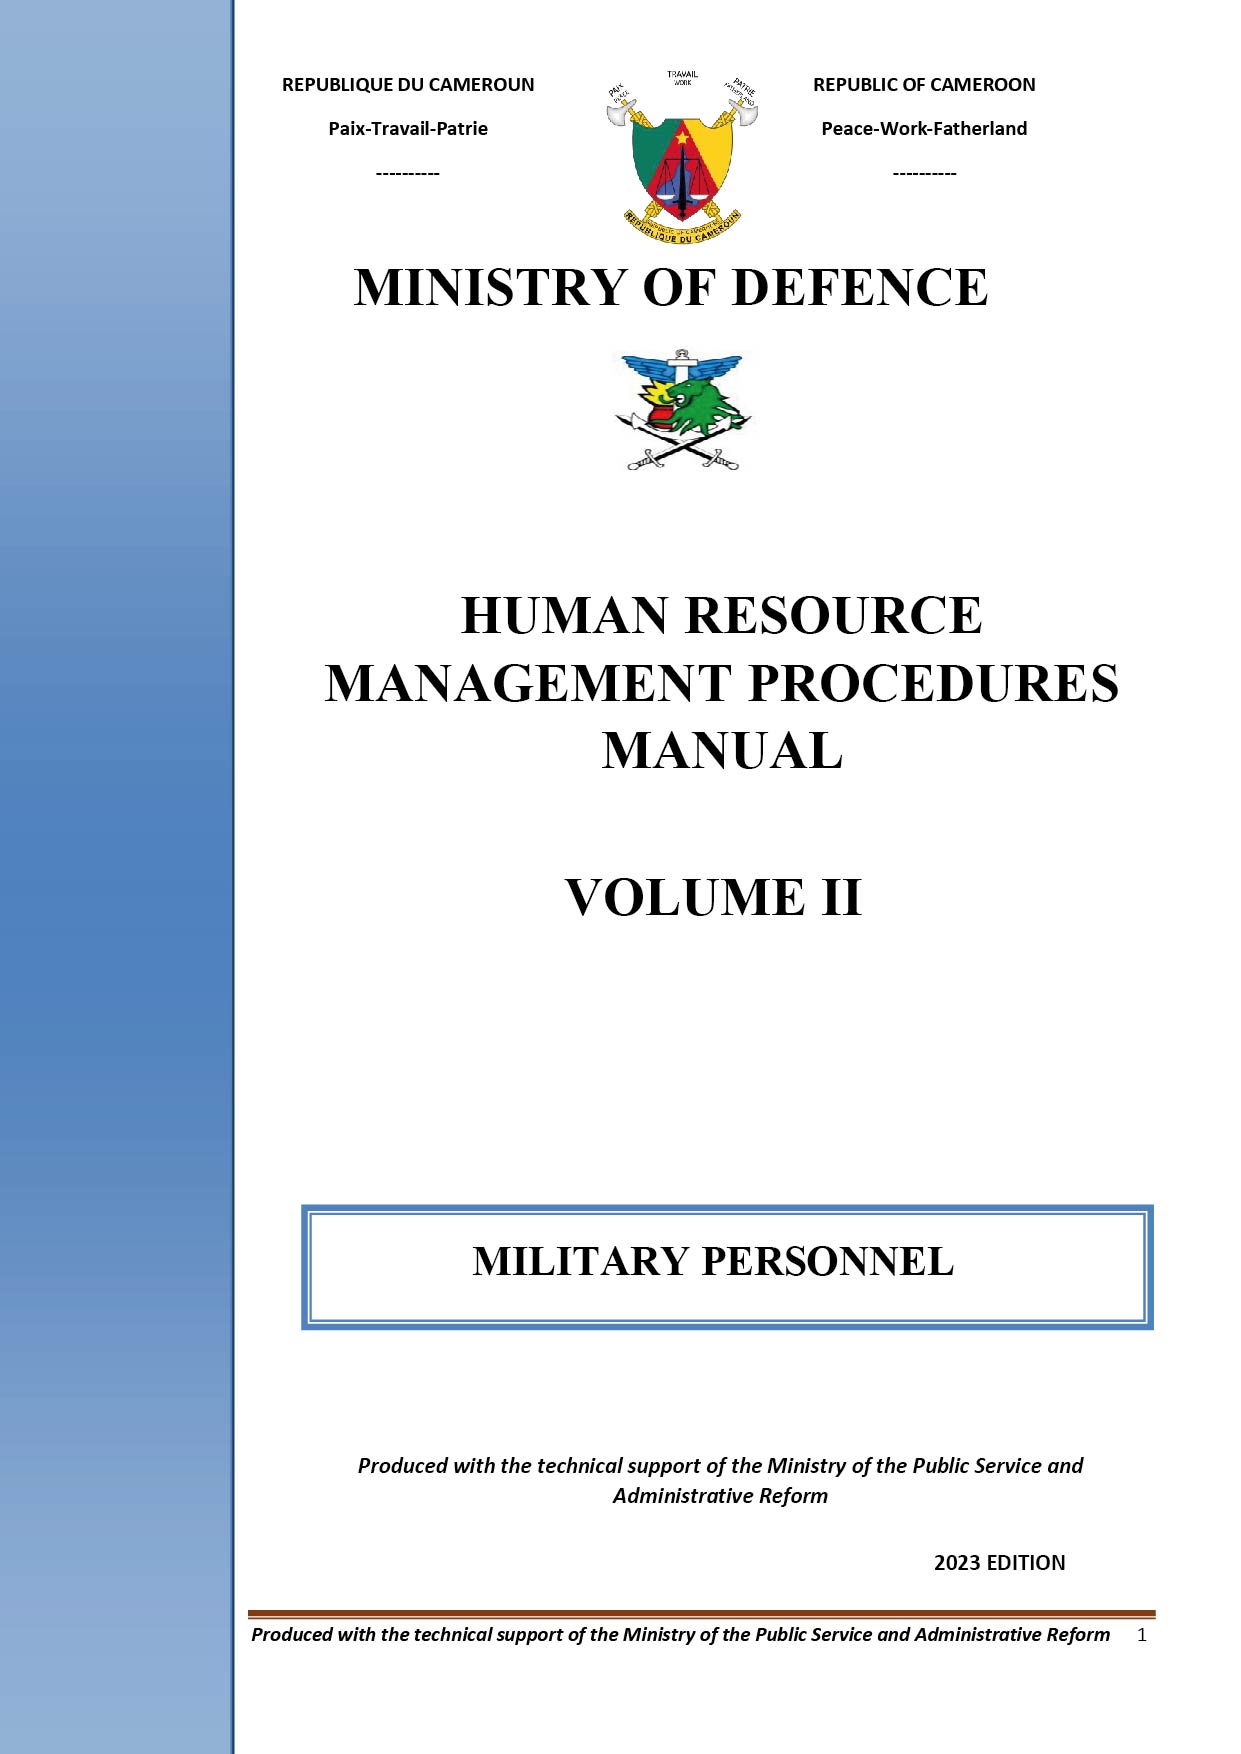 HUMAN RESOURCE MANAGEMENT PROCEDURES MANUAL MILITARY PERSONNEL VOLUME II